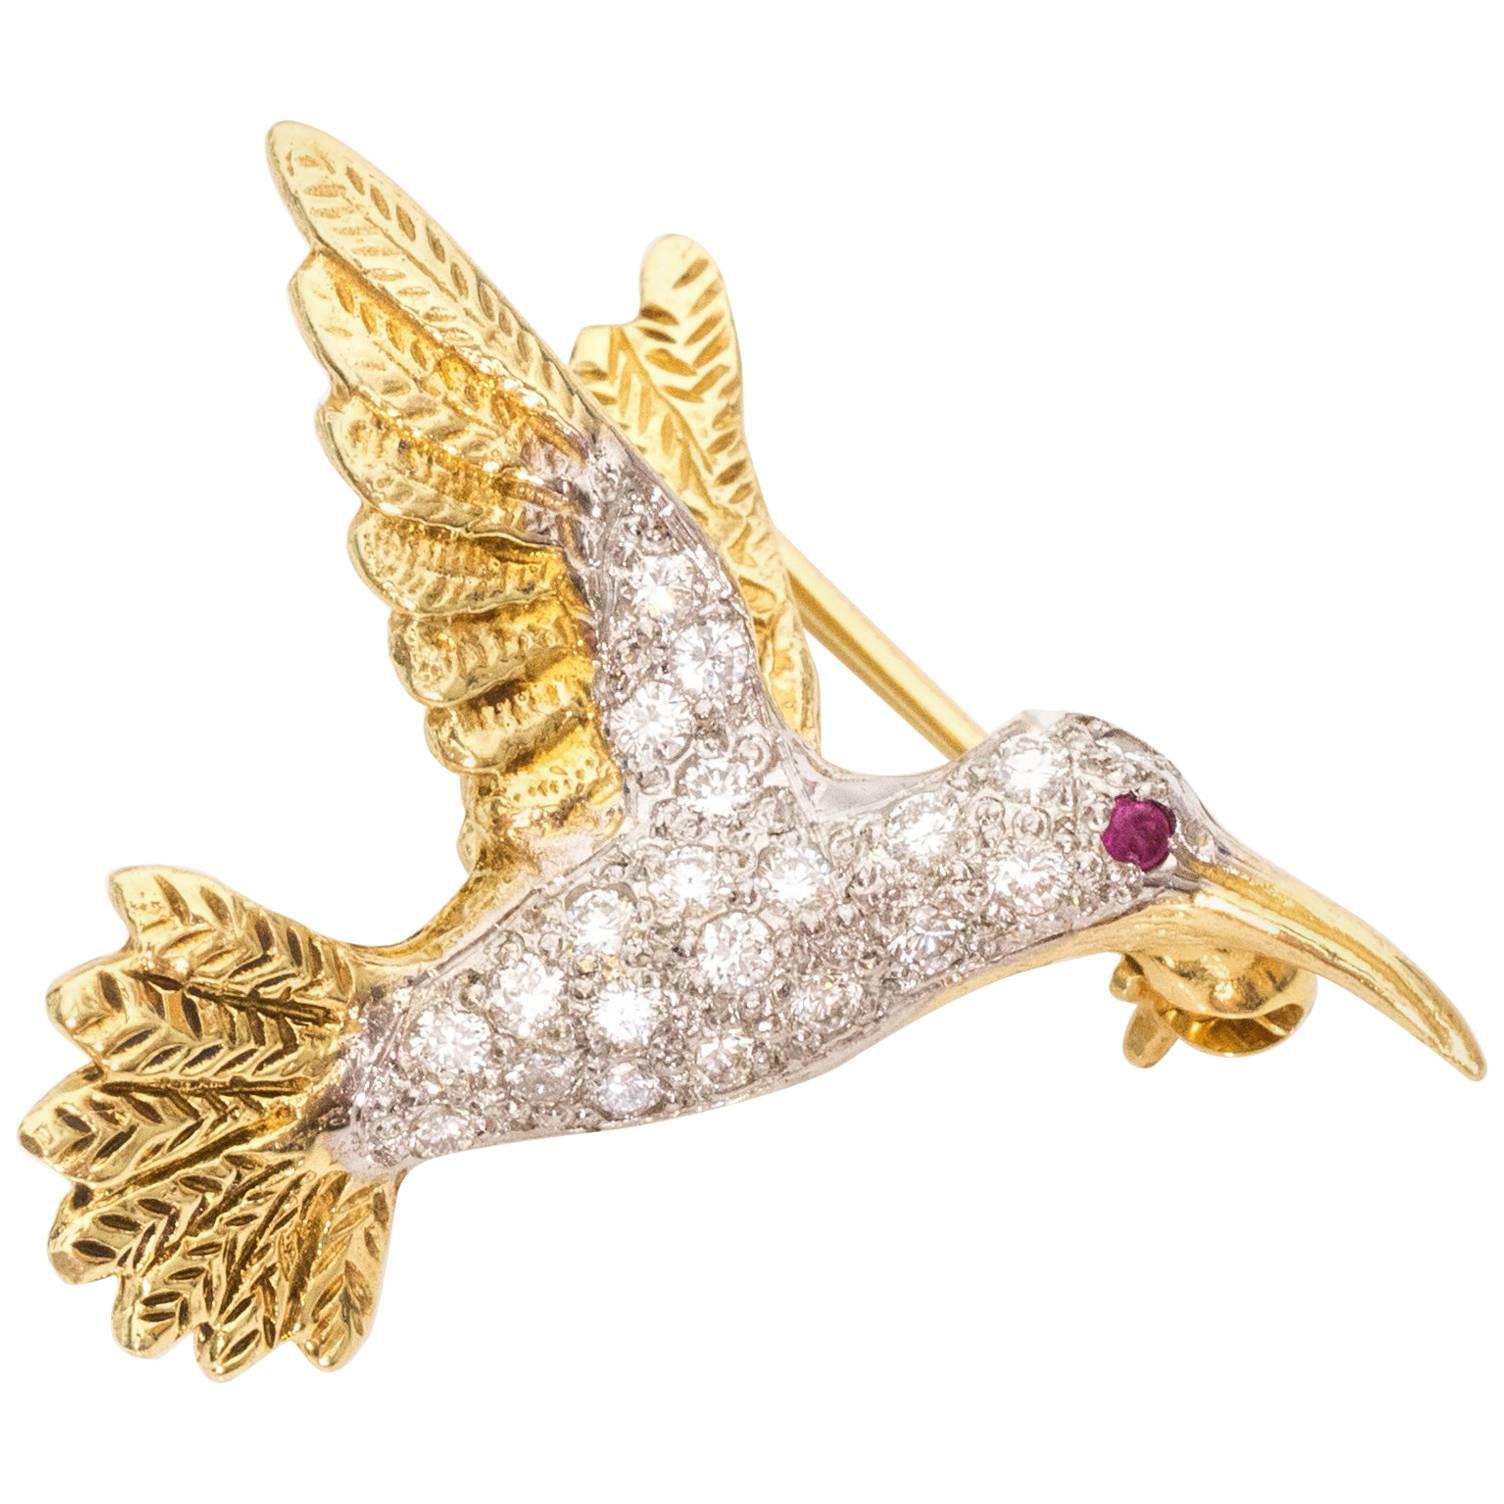  Hummingbird Brooch with Yellow Gold, Diamonds, Ruby